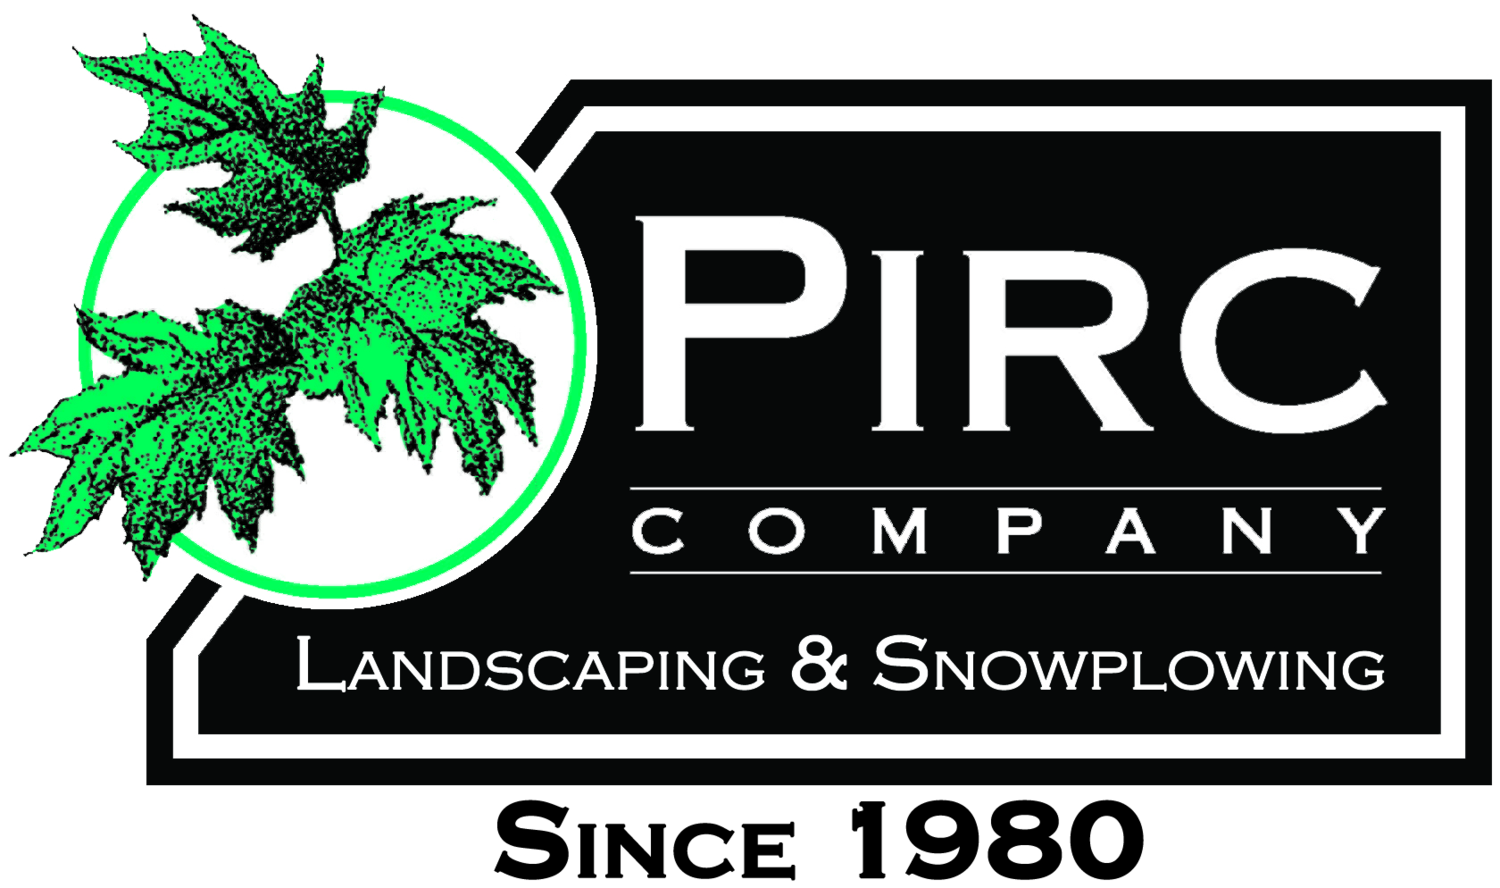 Pirc Company Landscaping  Snowplowing